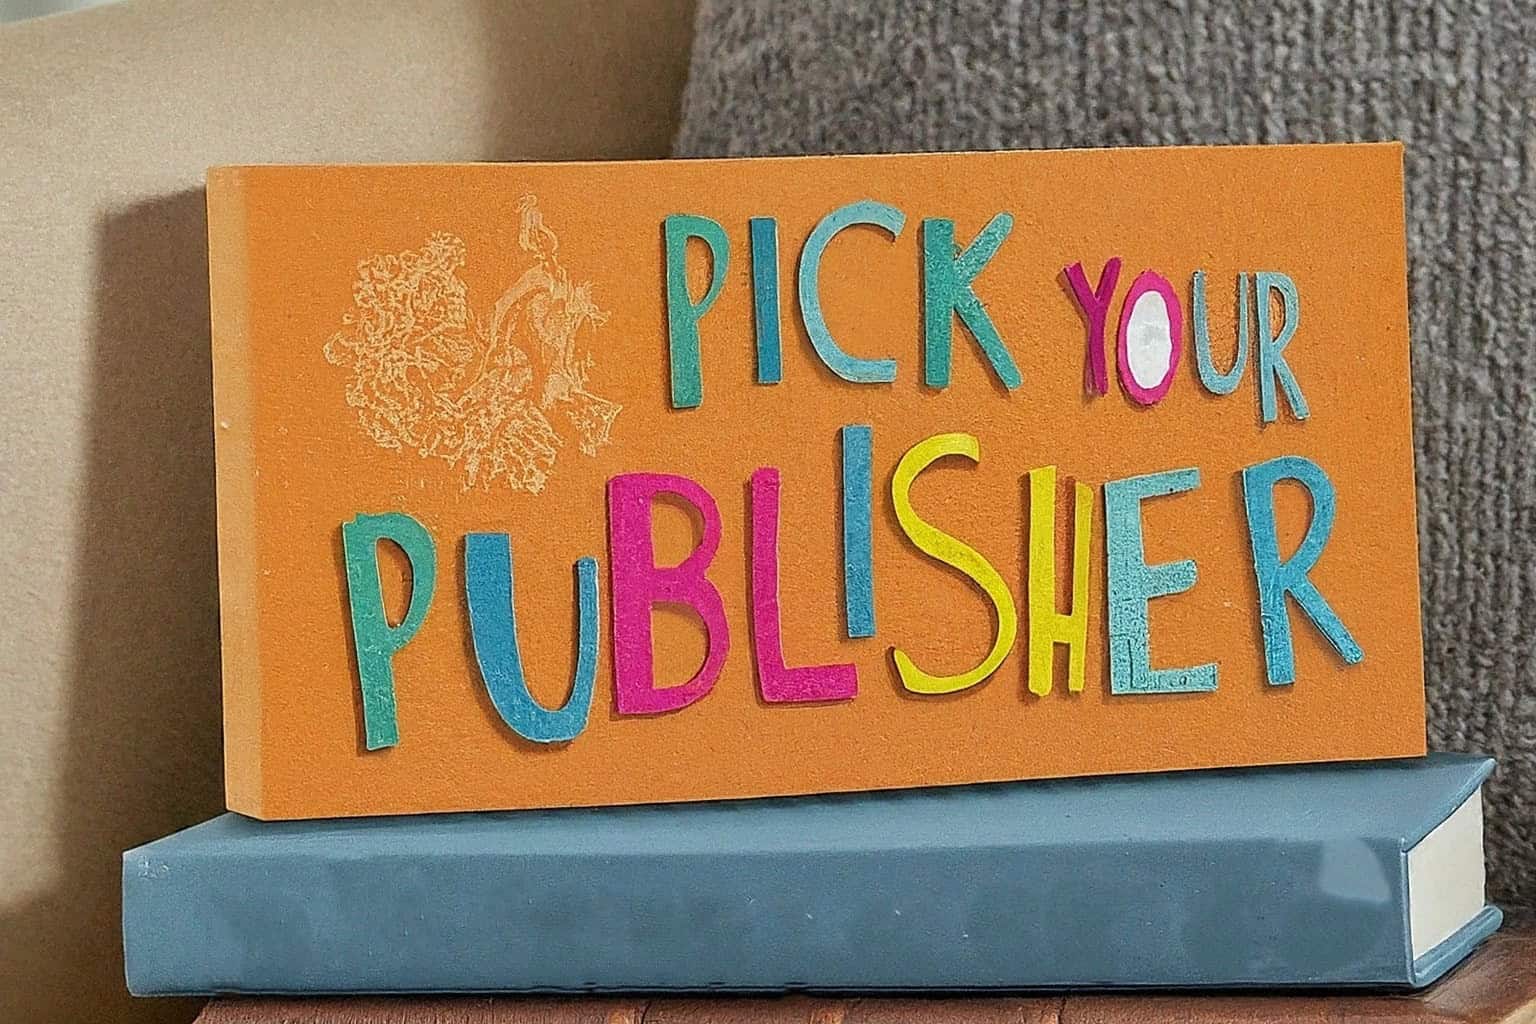 Pick your publisher book illustration